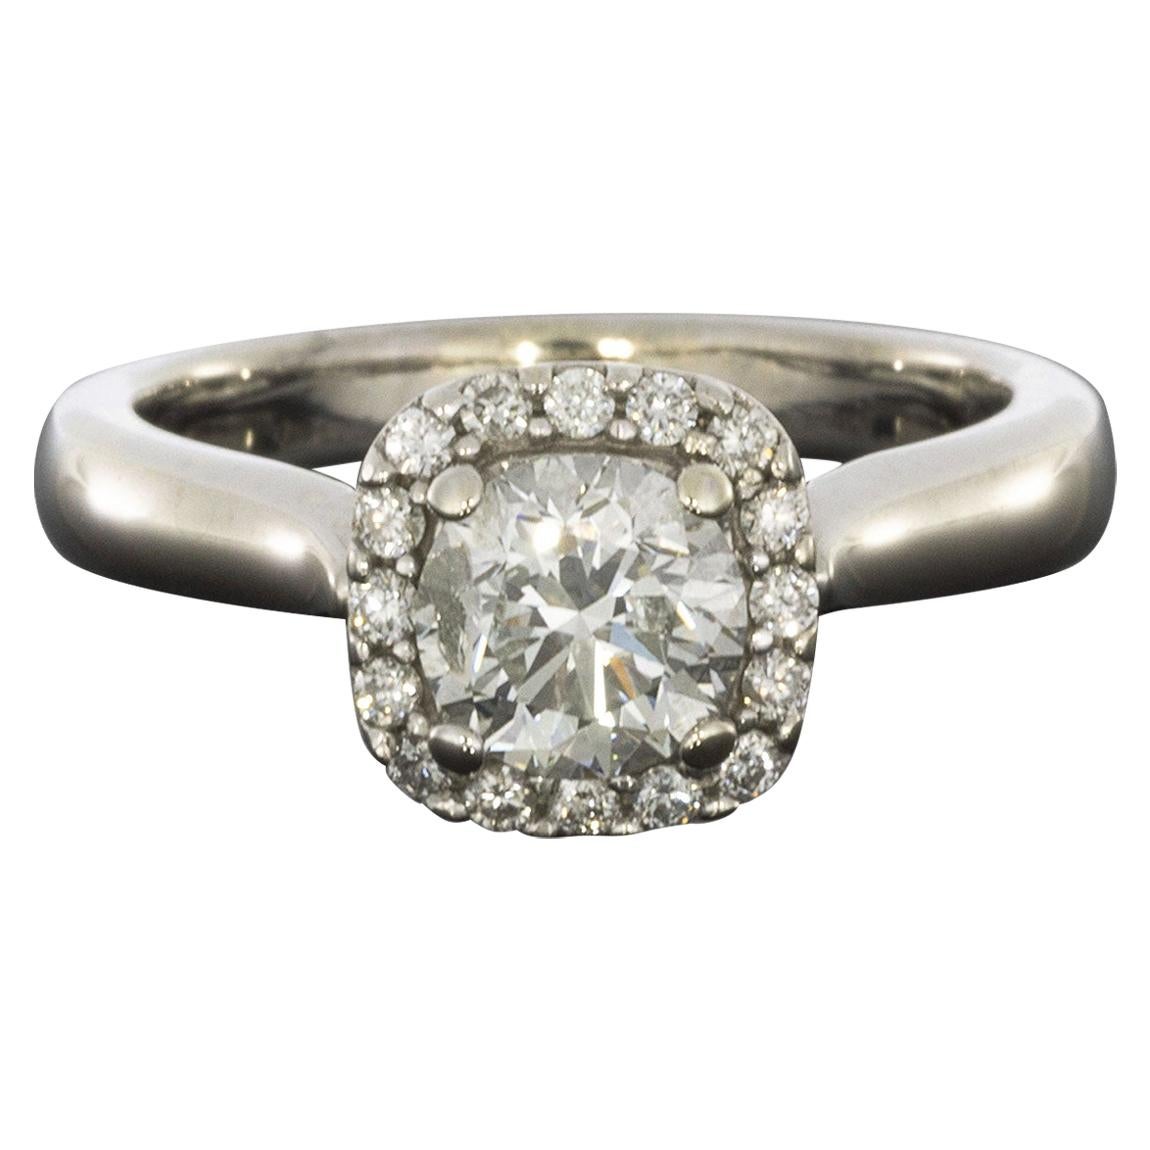 White Gold 1.15 Carat Round Diamond Halo Engagement Ring